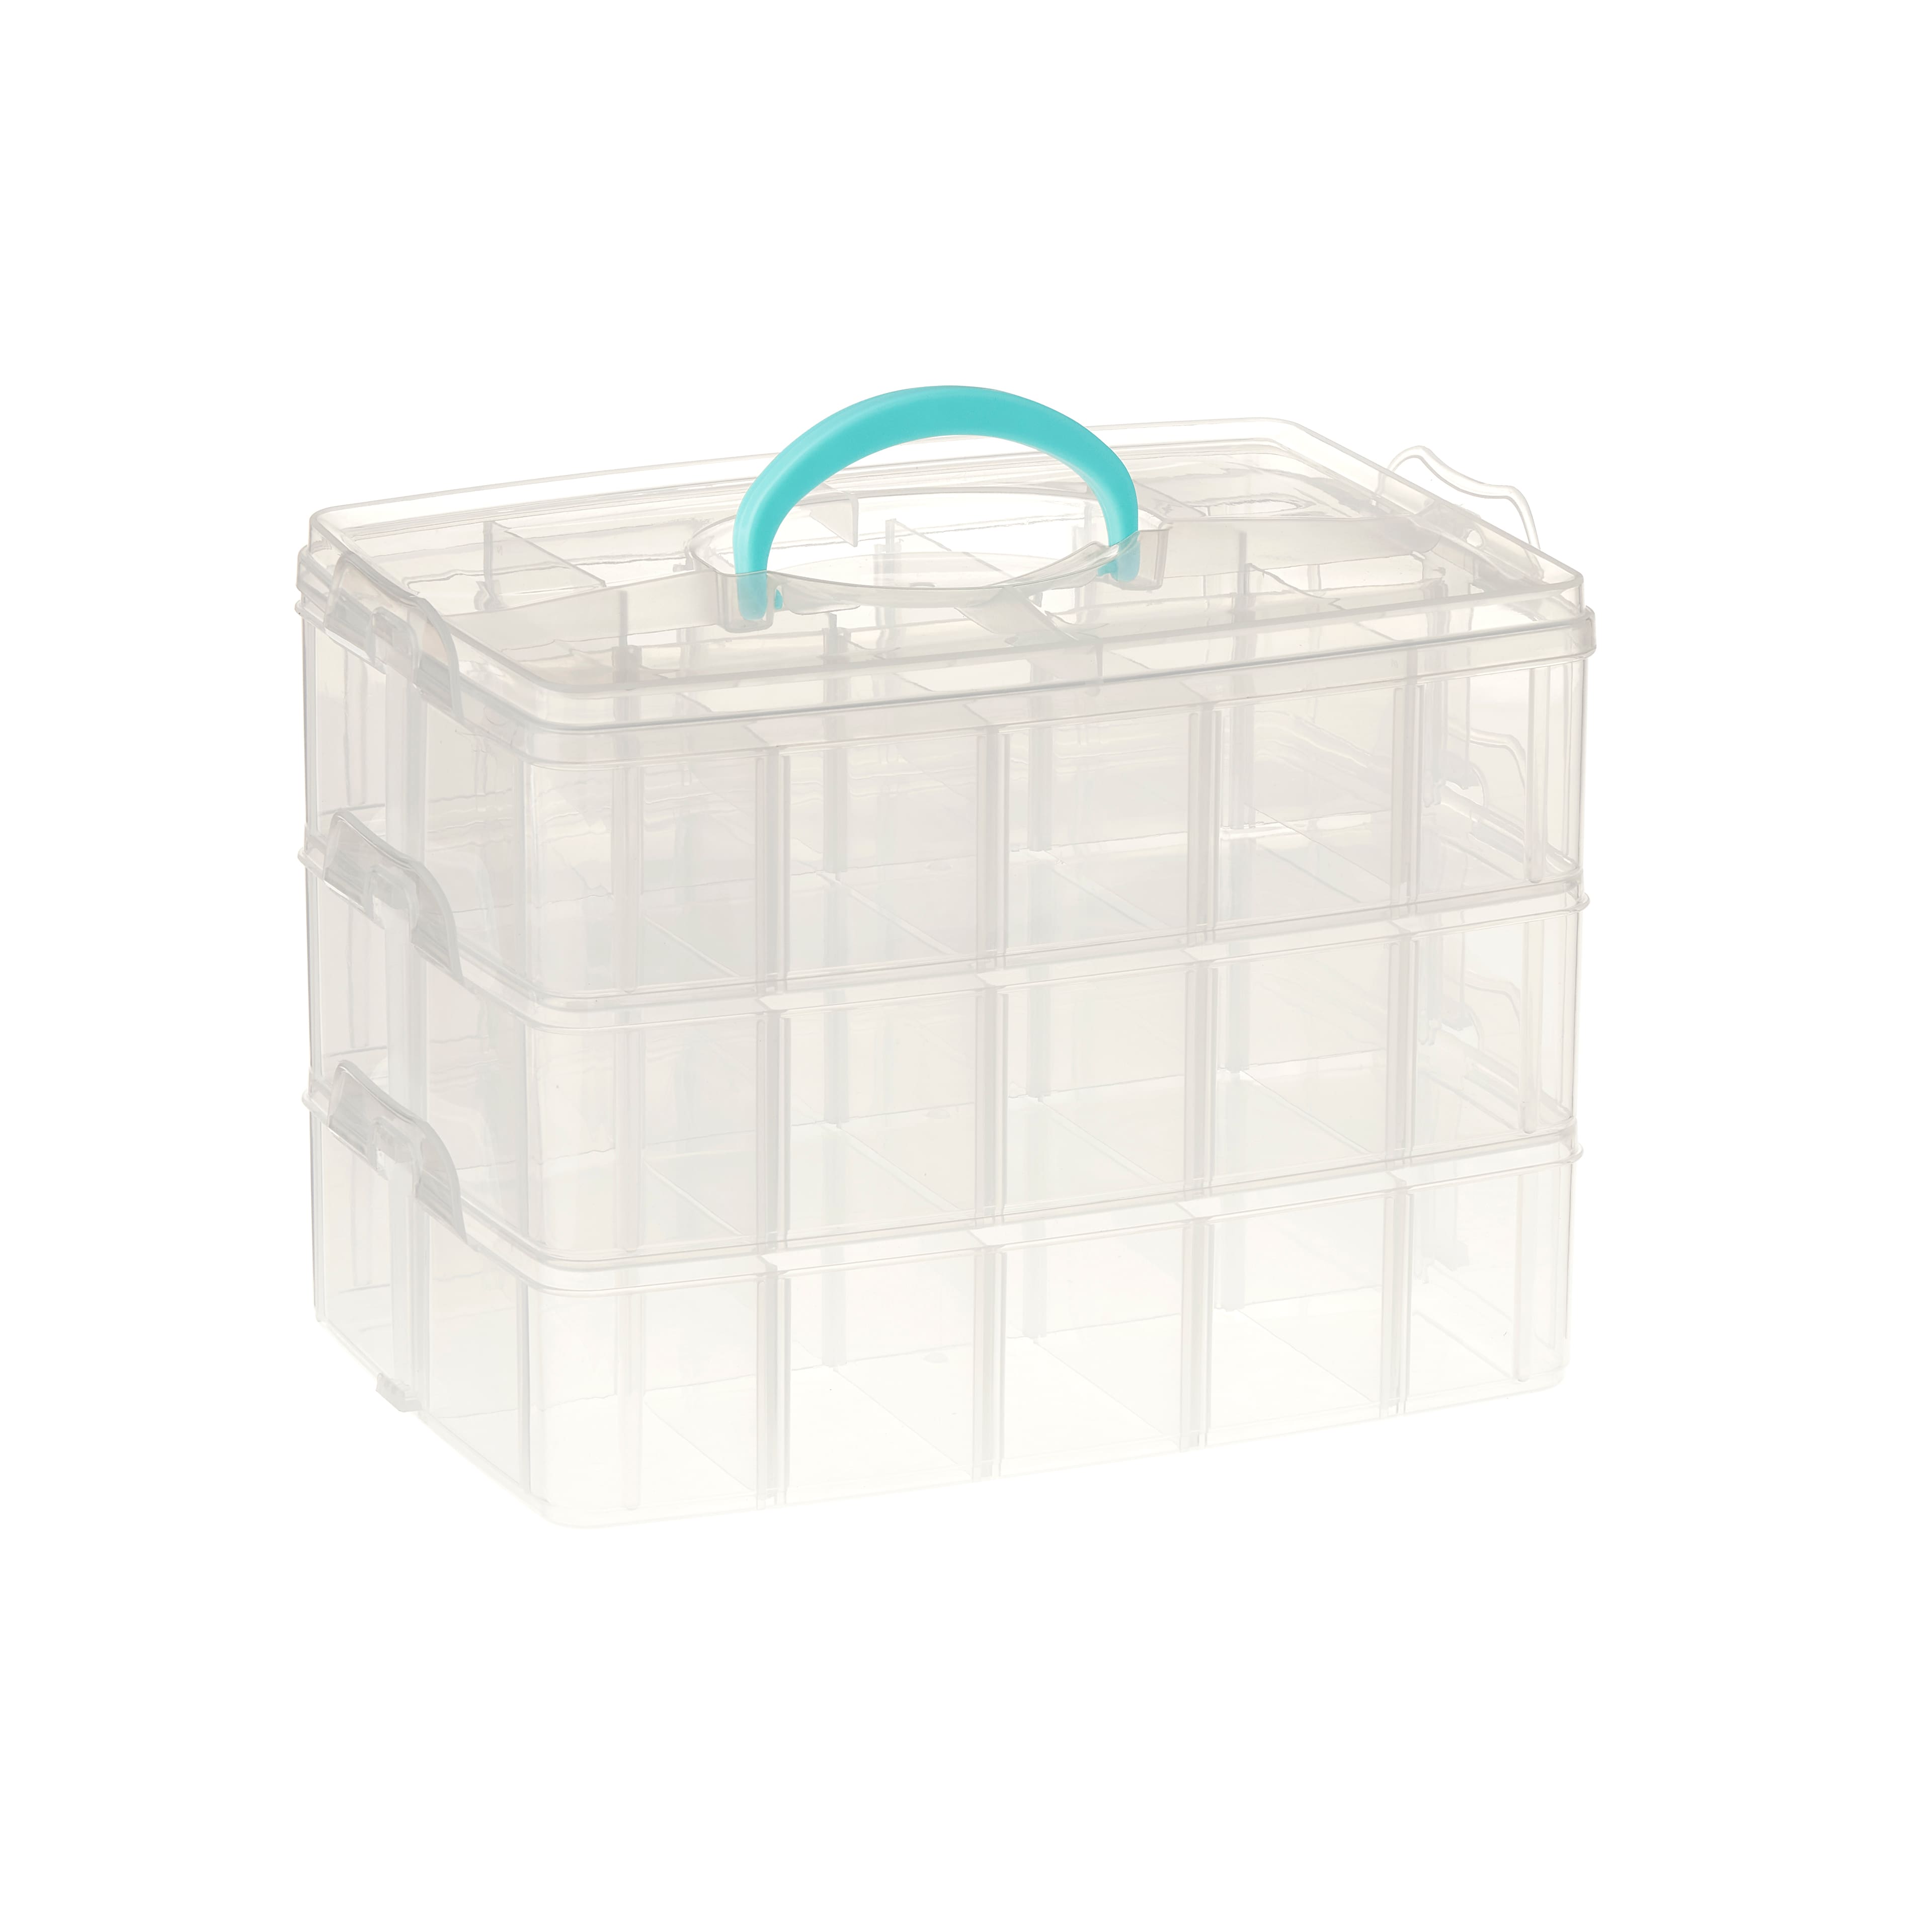 1 X Organizer Jewelry Box Plastic Cases Slots Container Storage Bead Jewelry NEW 